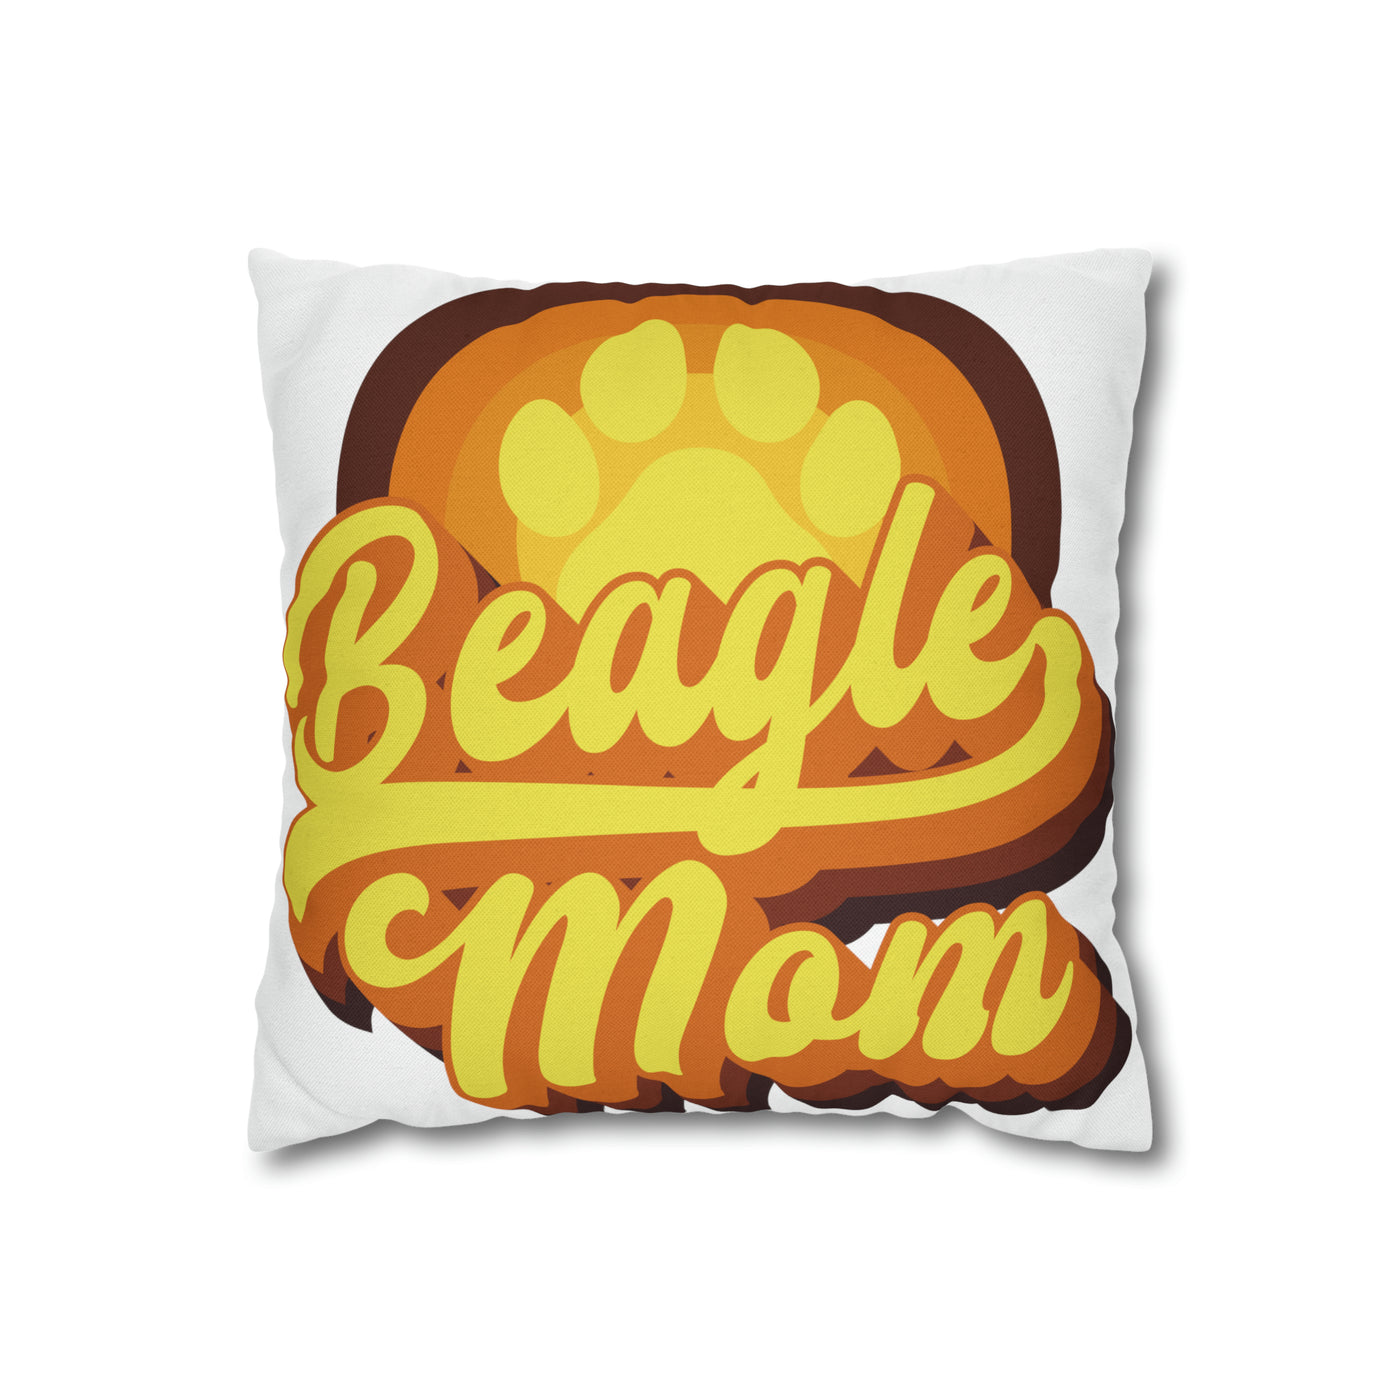 Retro Beagle Mom Square Pillow Case